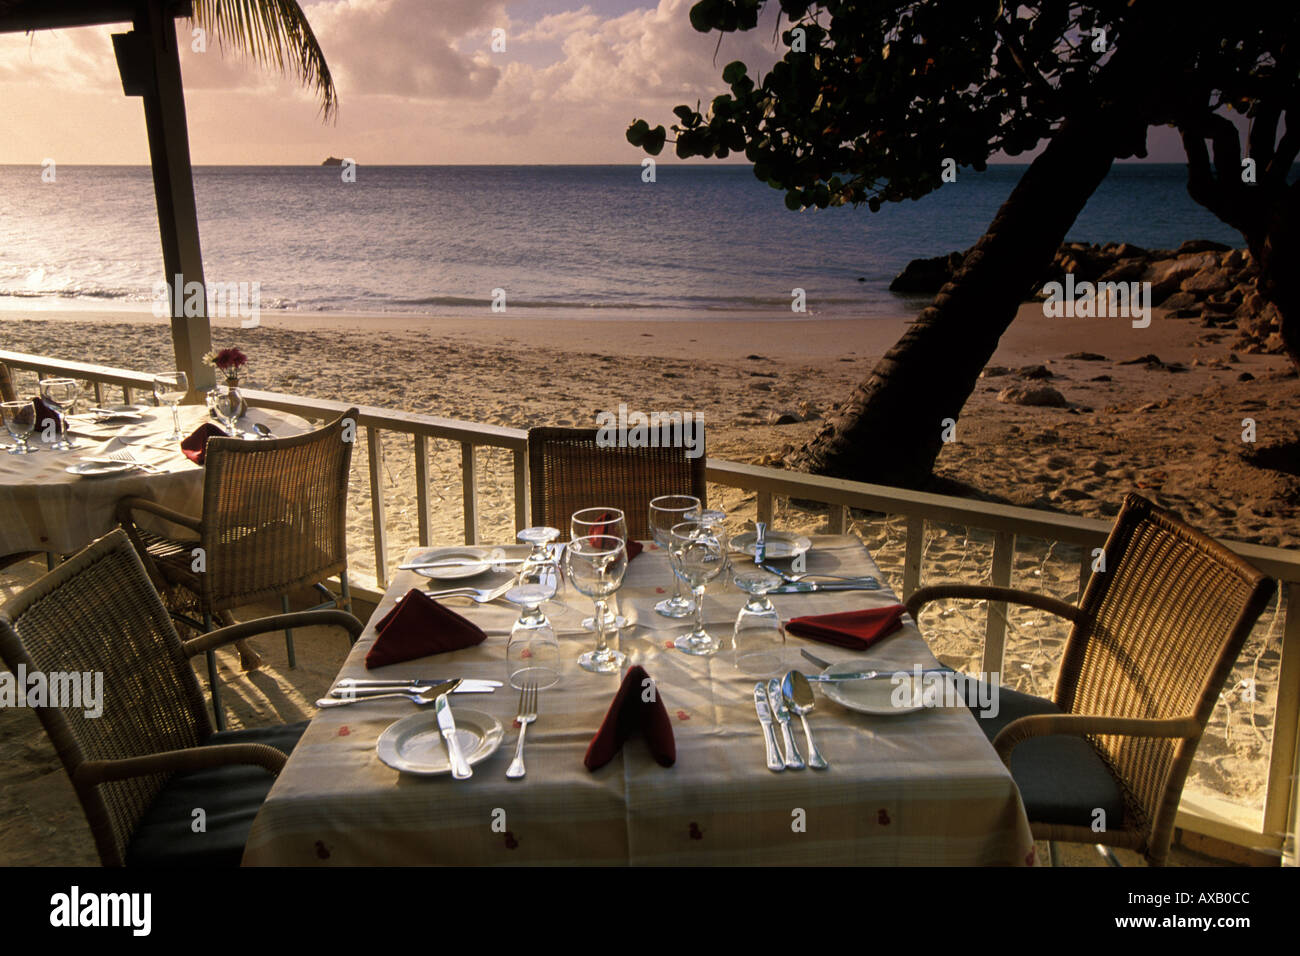 Antigua, Dickenson Bay, Coconut Grove Restaurant Stock Photo